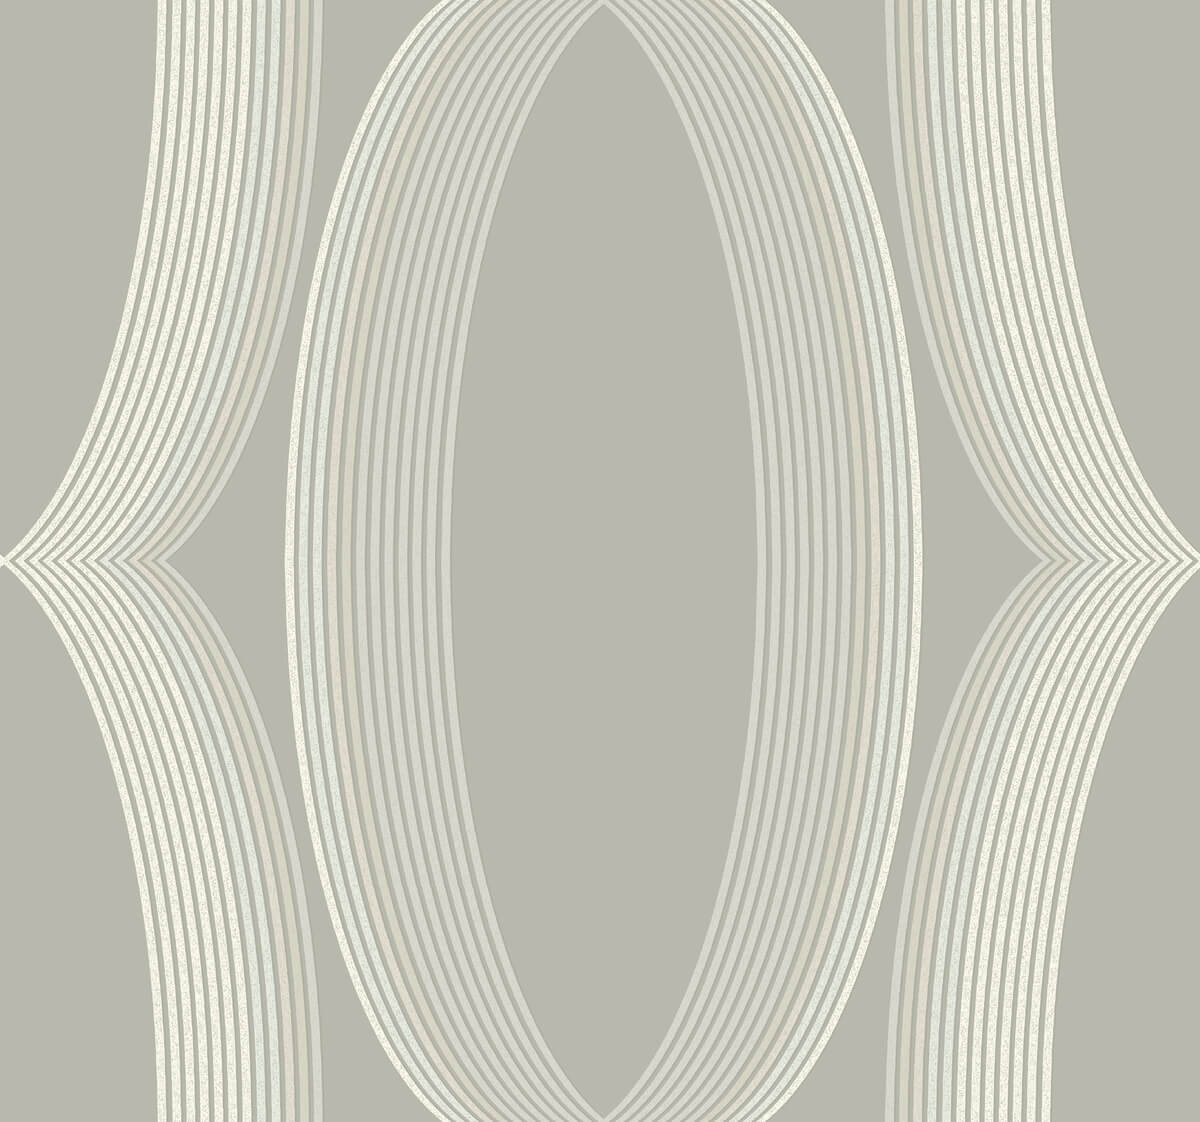 Candice Olson Casual Elegance Progression Ogee Wallpaper - Light Neutral